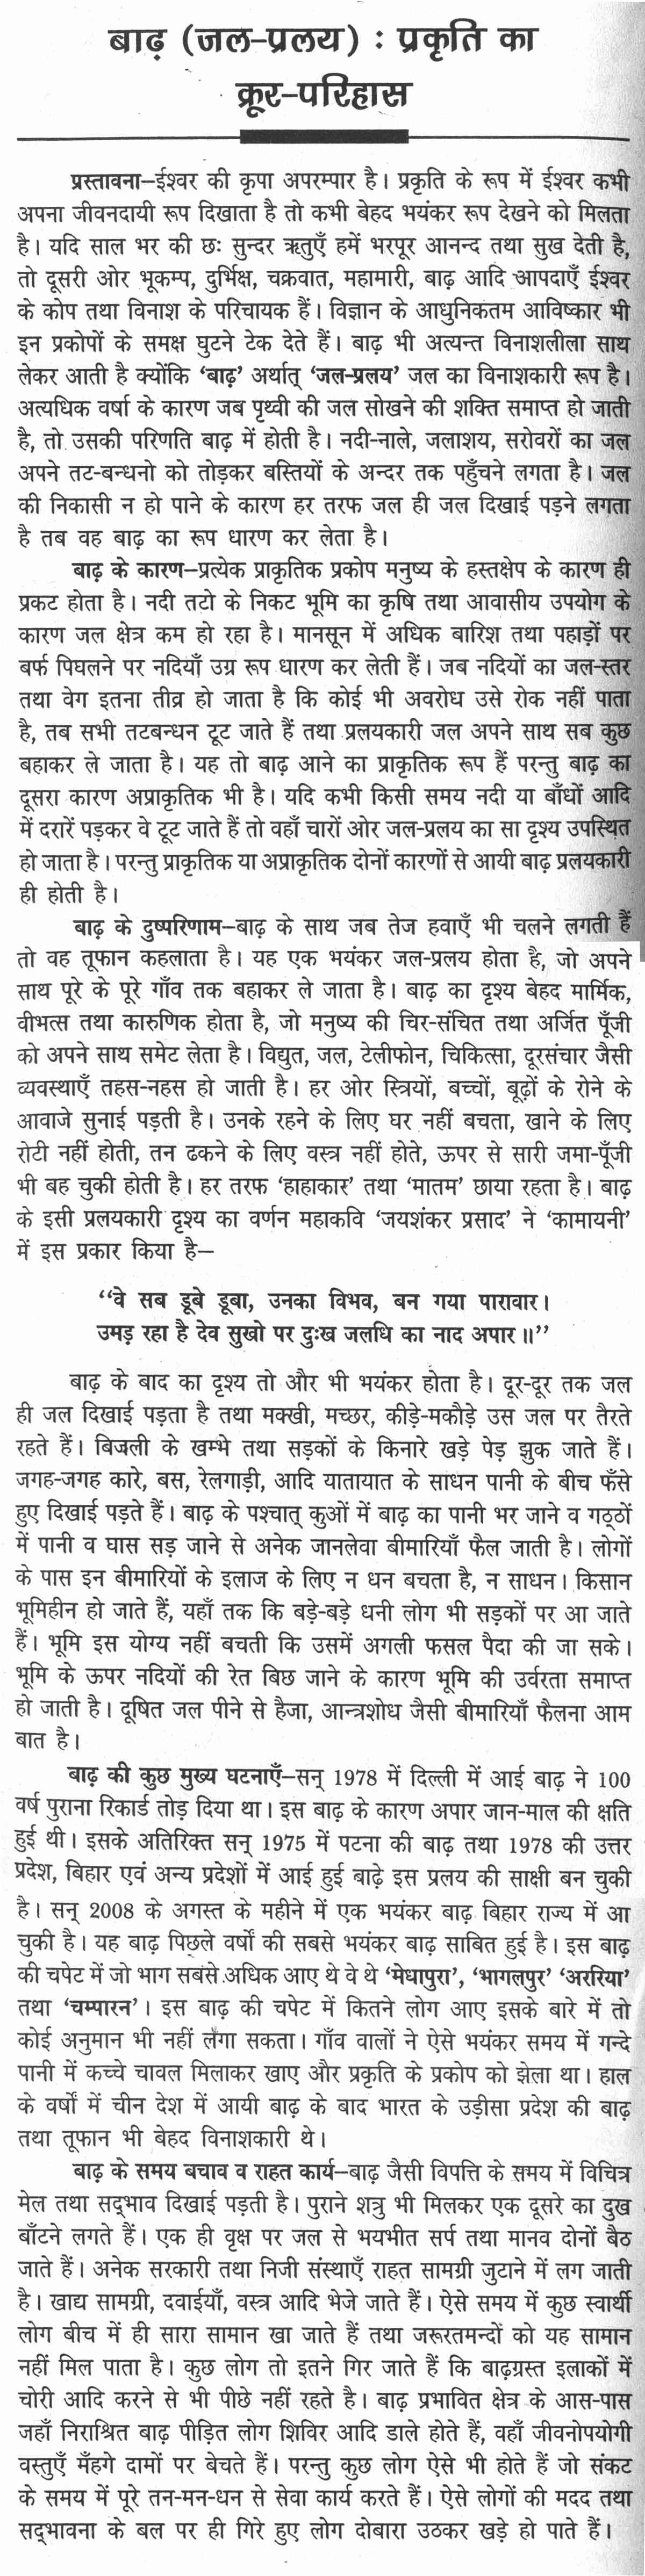 Essay on terrorism in world in hindi